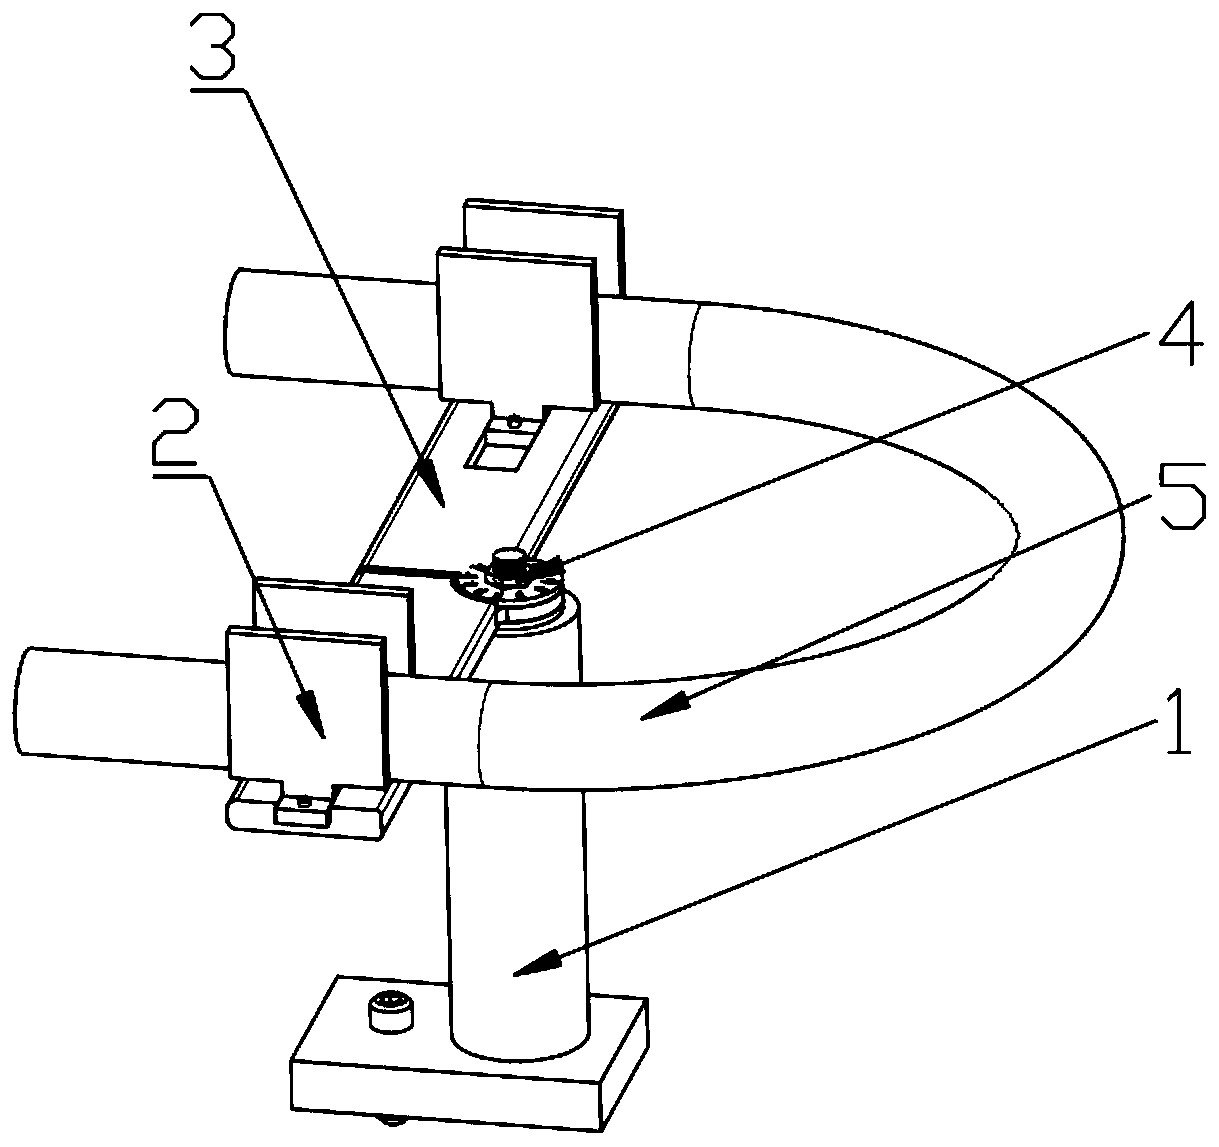 Bending angle measuring mechanism for metal bent pipe